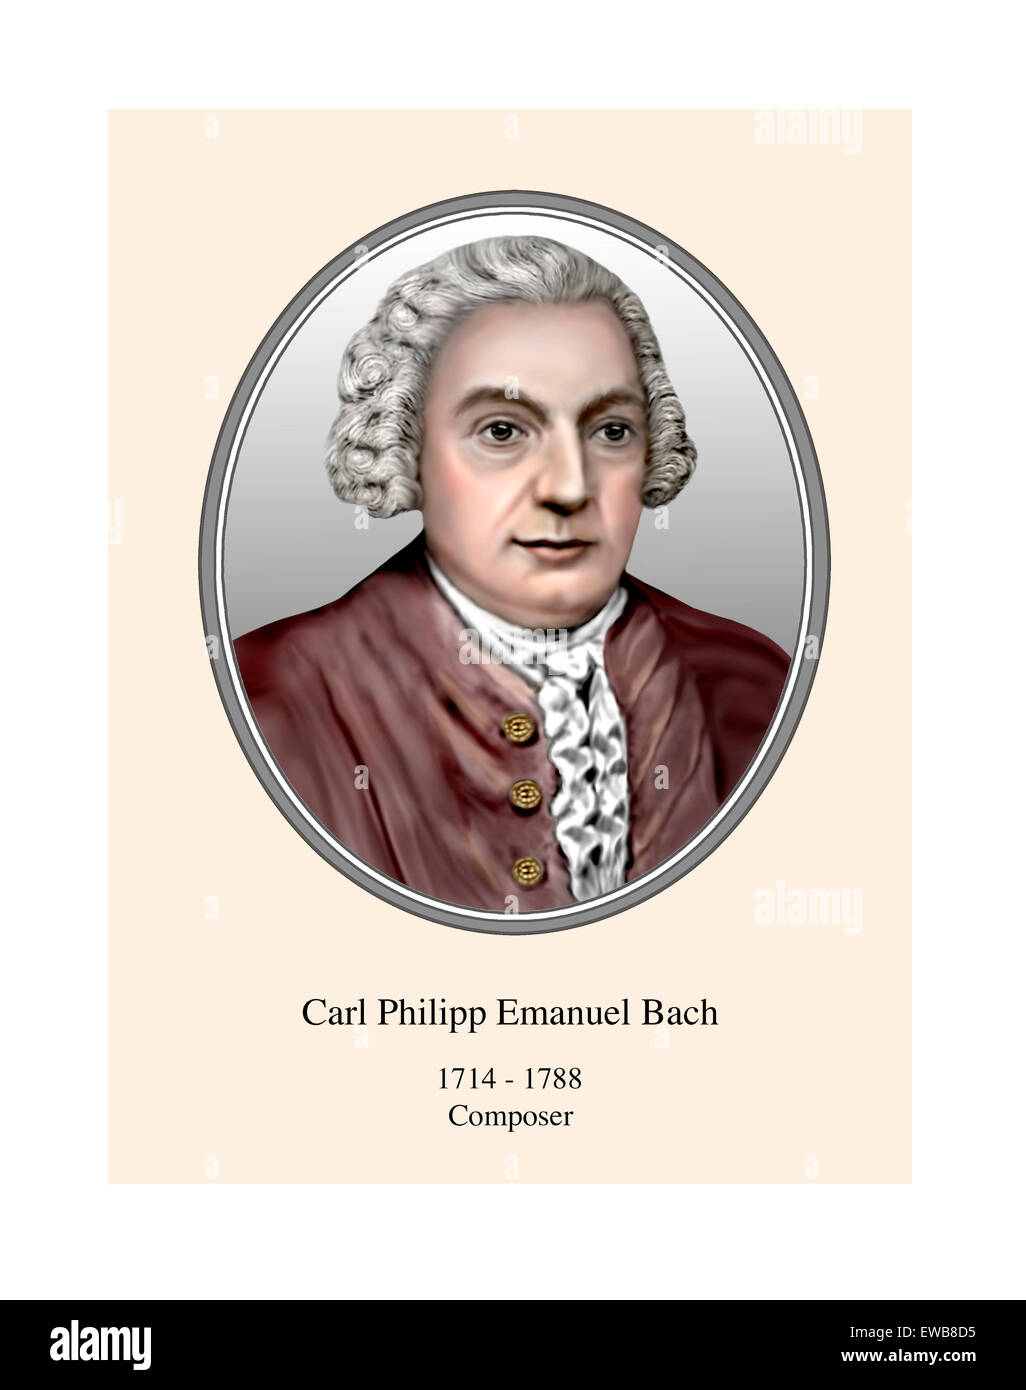 Carl Philipp Emanuel Bach Portrait Modern Illustration Stock Photo